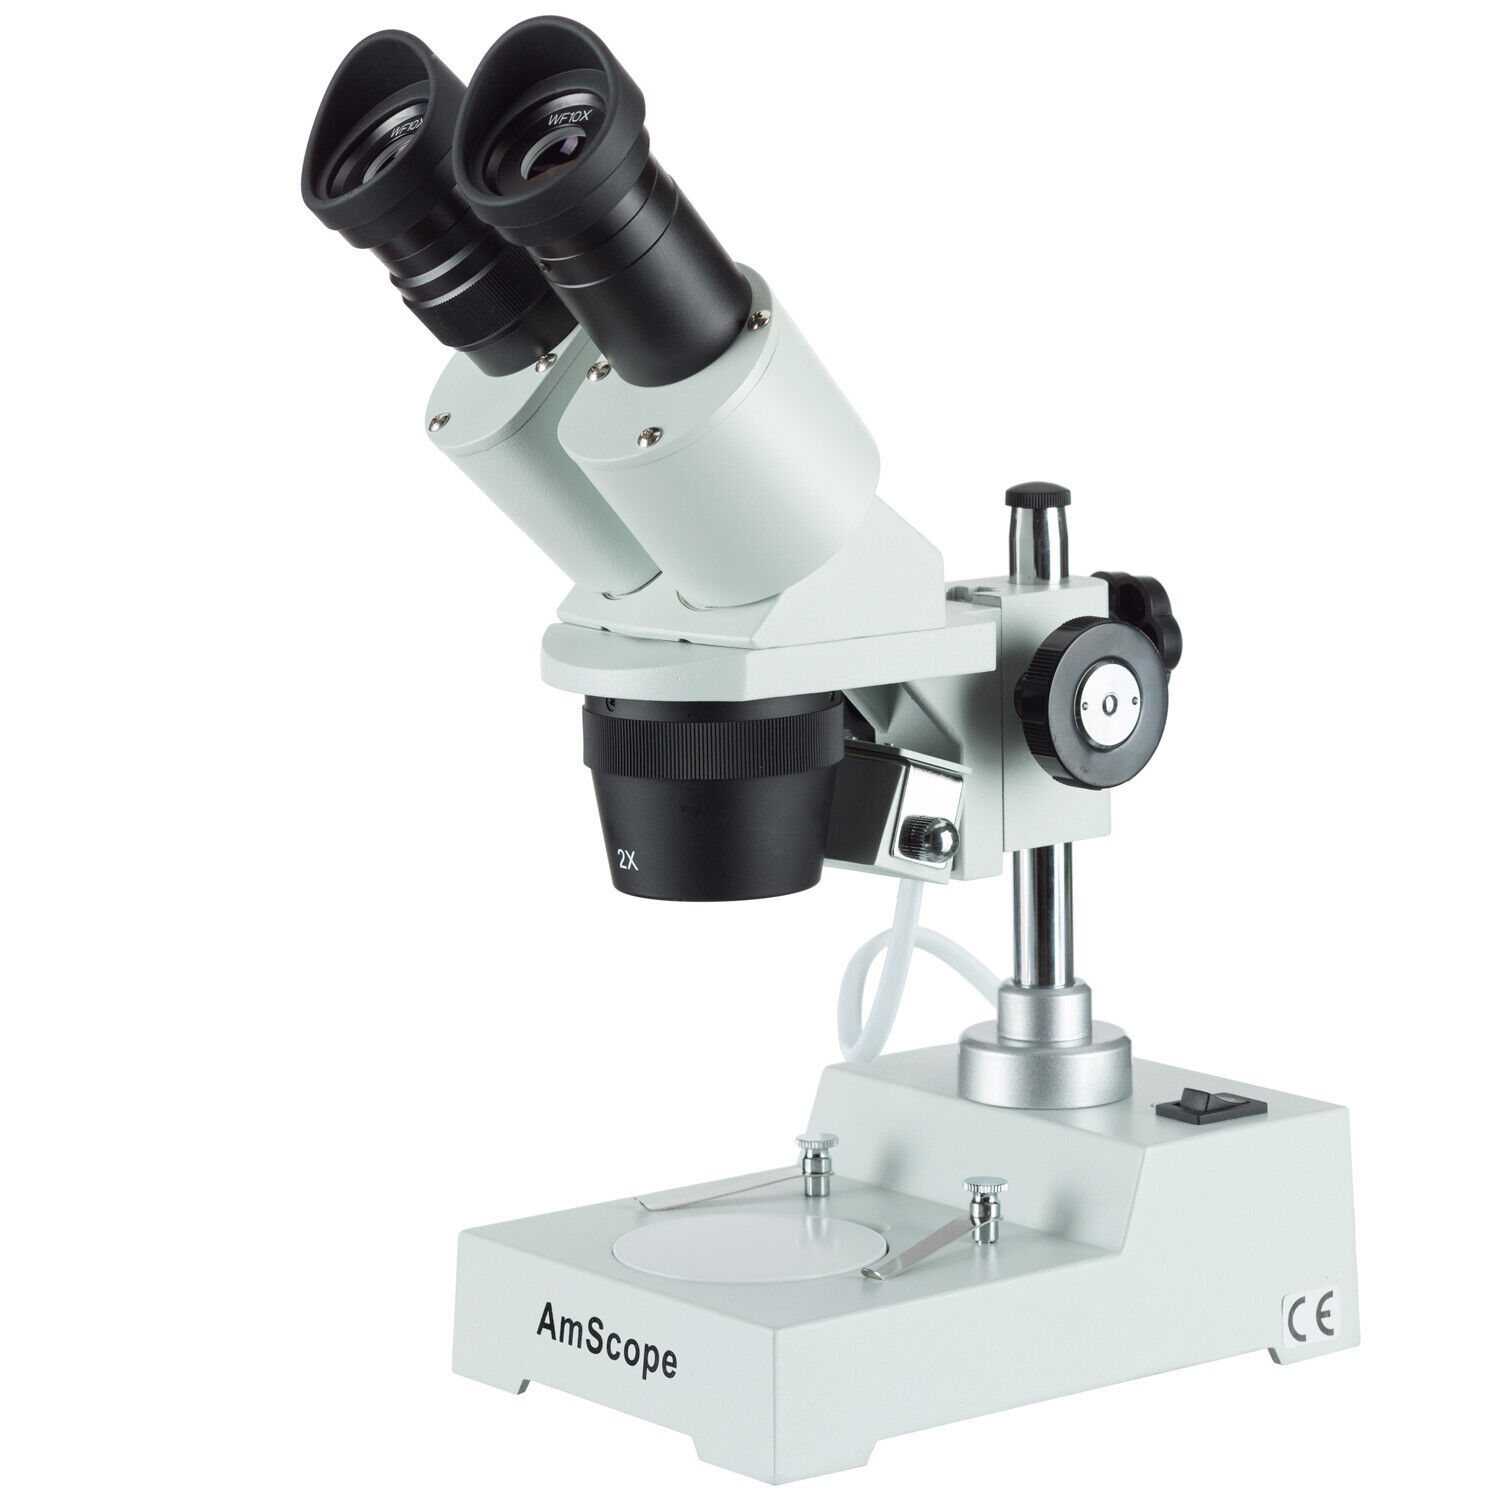 AmScope SE304R-P 20X-40X Sharp Forward Binocular Stereo Microscope